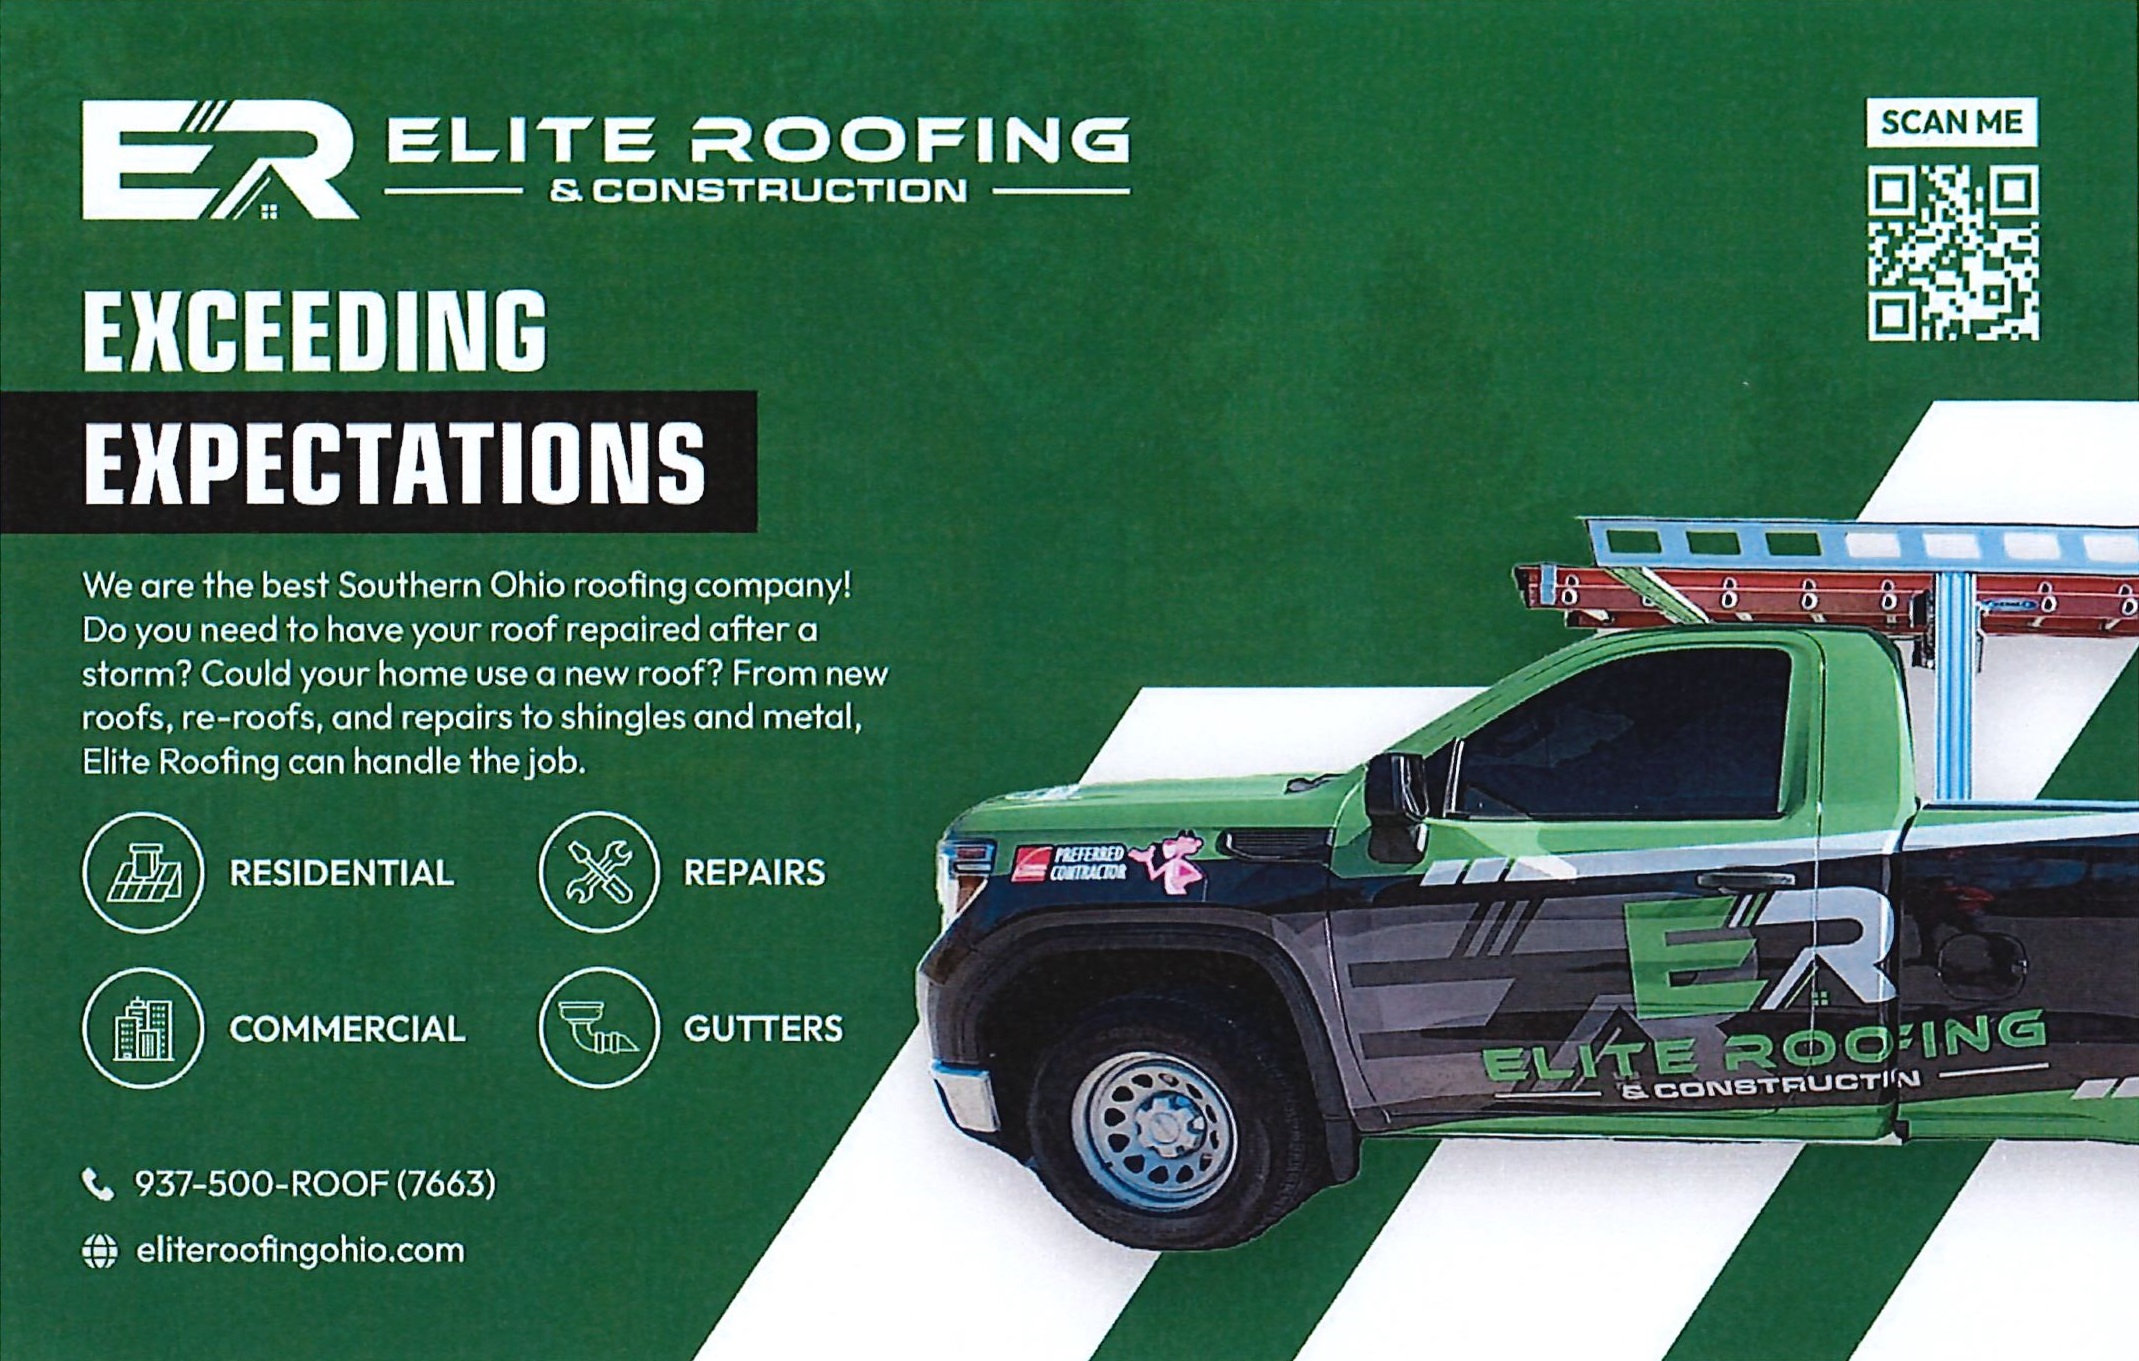 Elite Roofing & Construction Advertisement